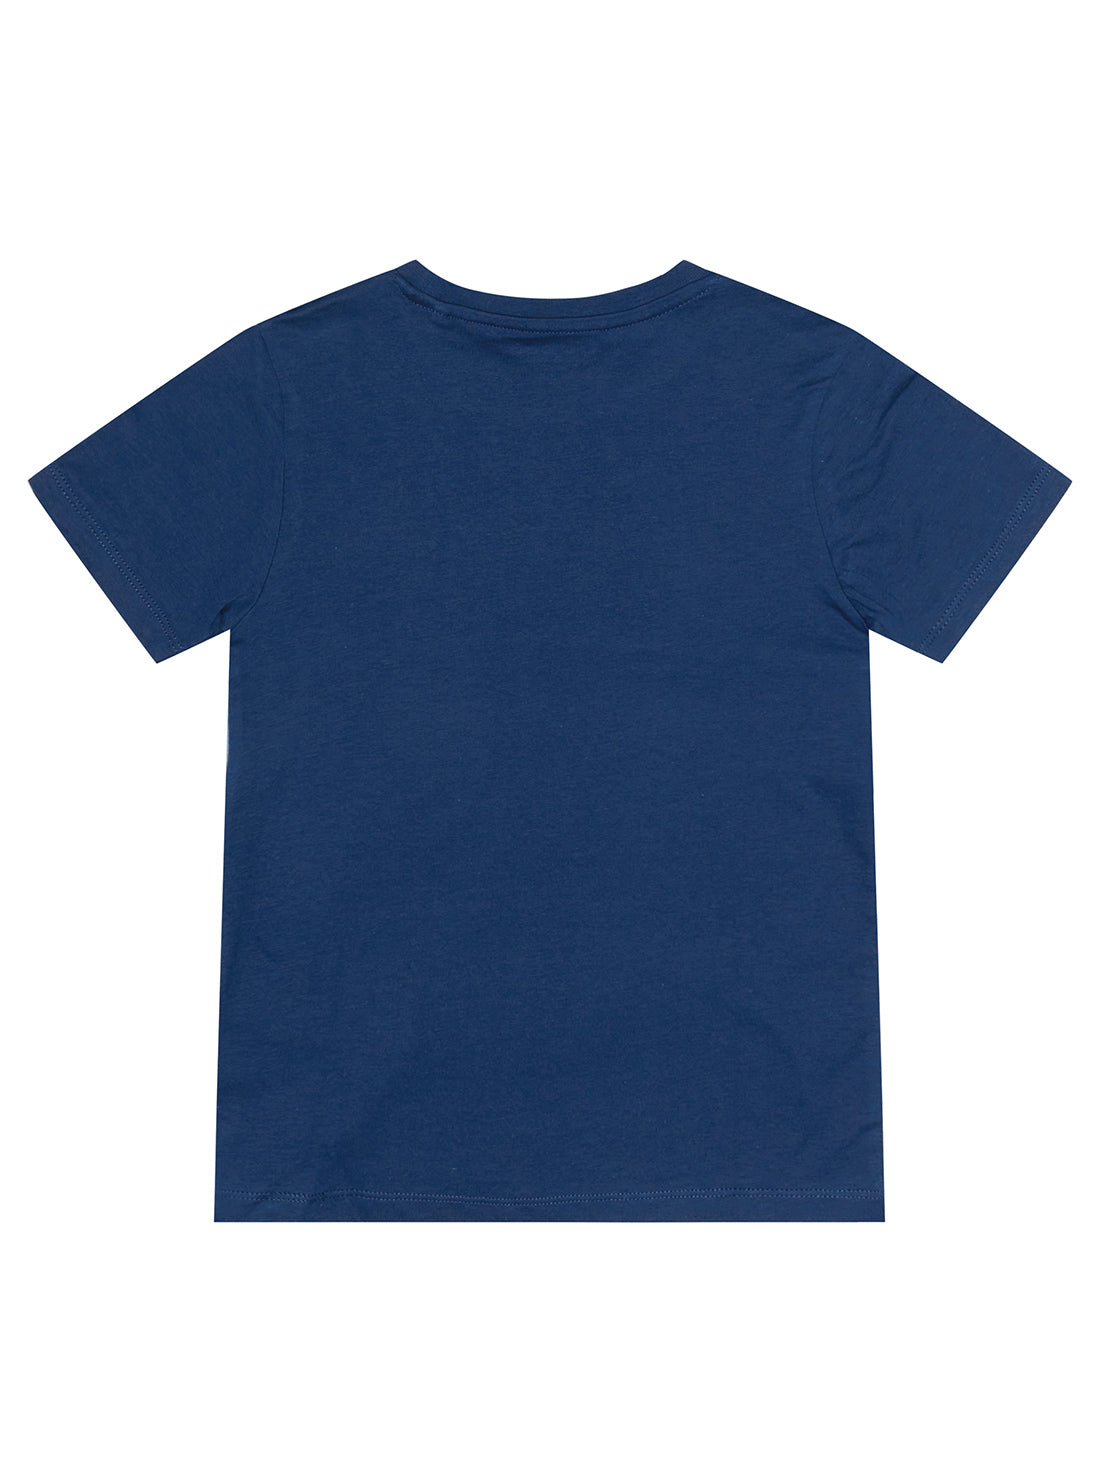 Boy's Navy Blue 1981 Logo T-Shirt back view